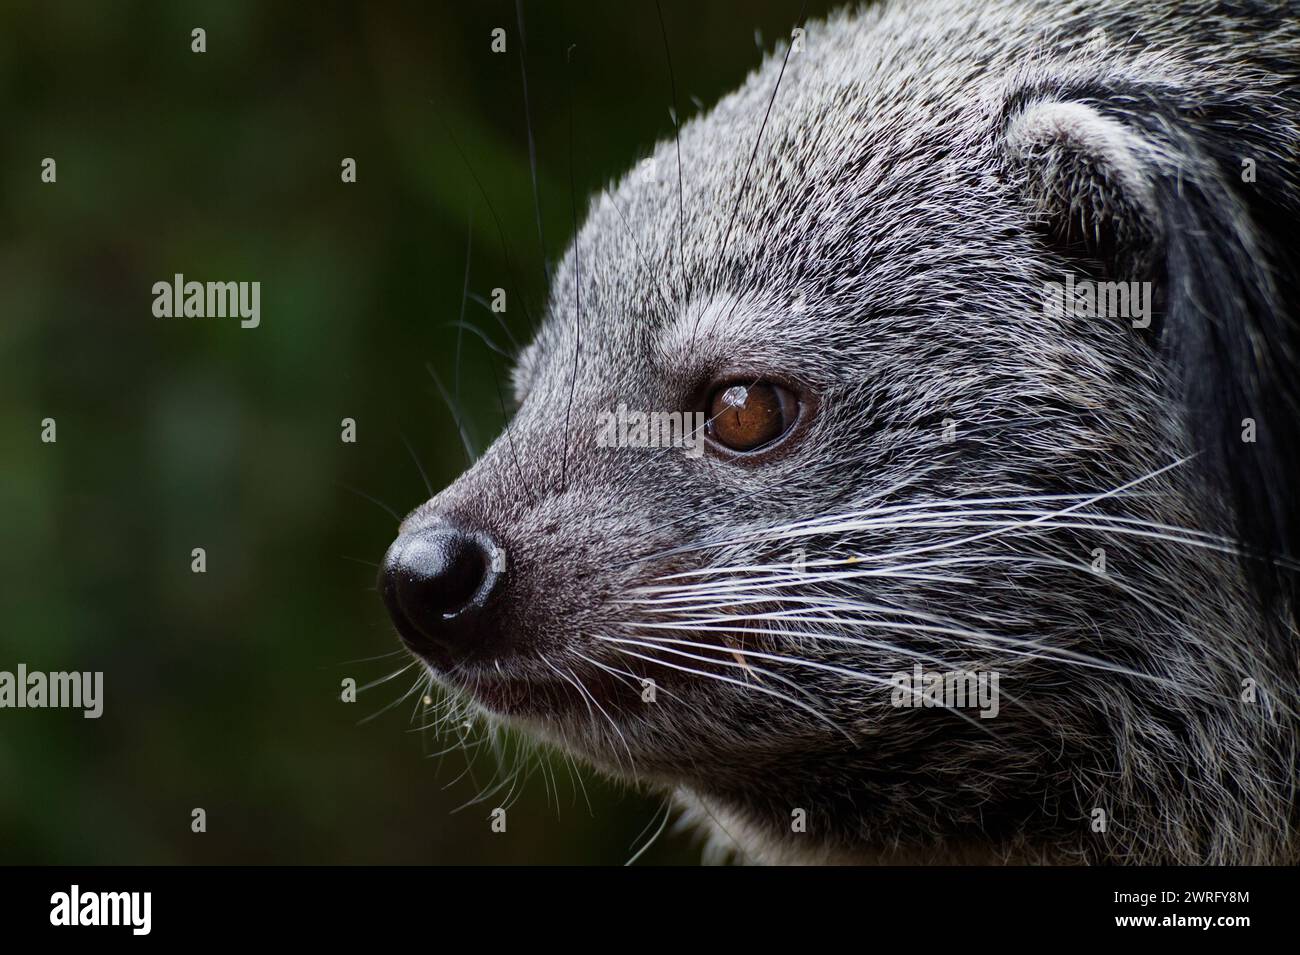 Profile Headshot Of A Captive Binturong Or Bearcat, Arctictis binturong, Showing Long Whiskers And Coarse Fur Stock Photo